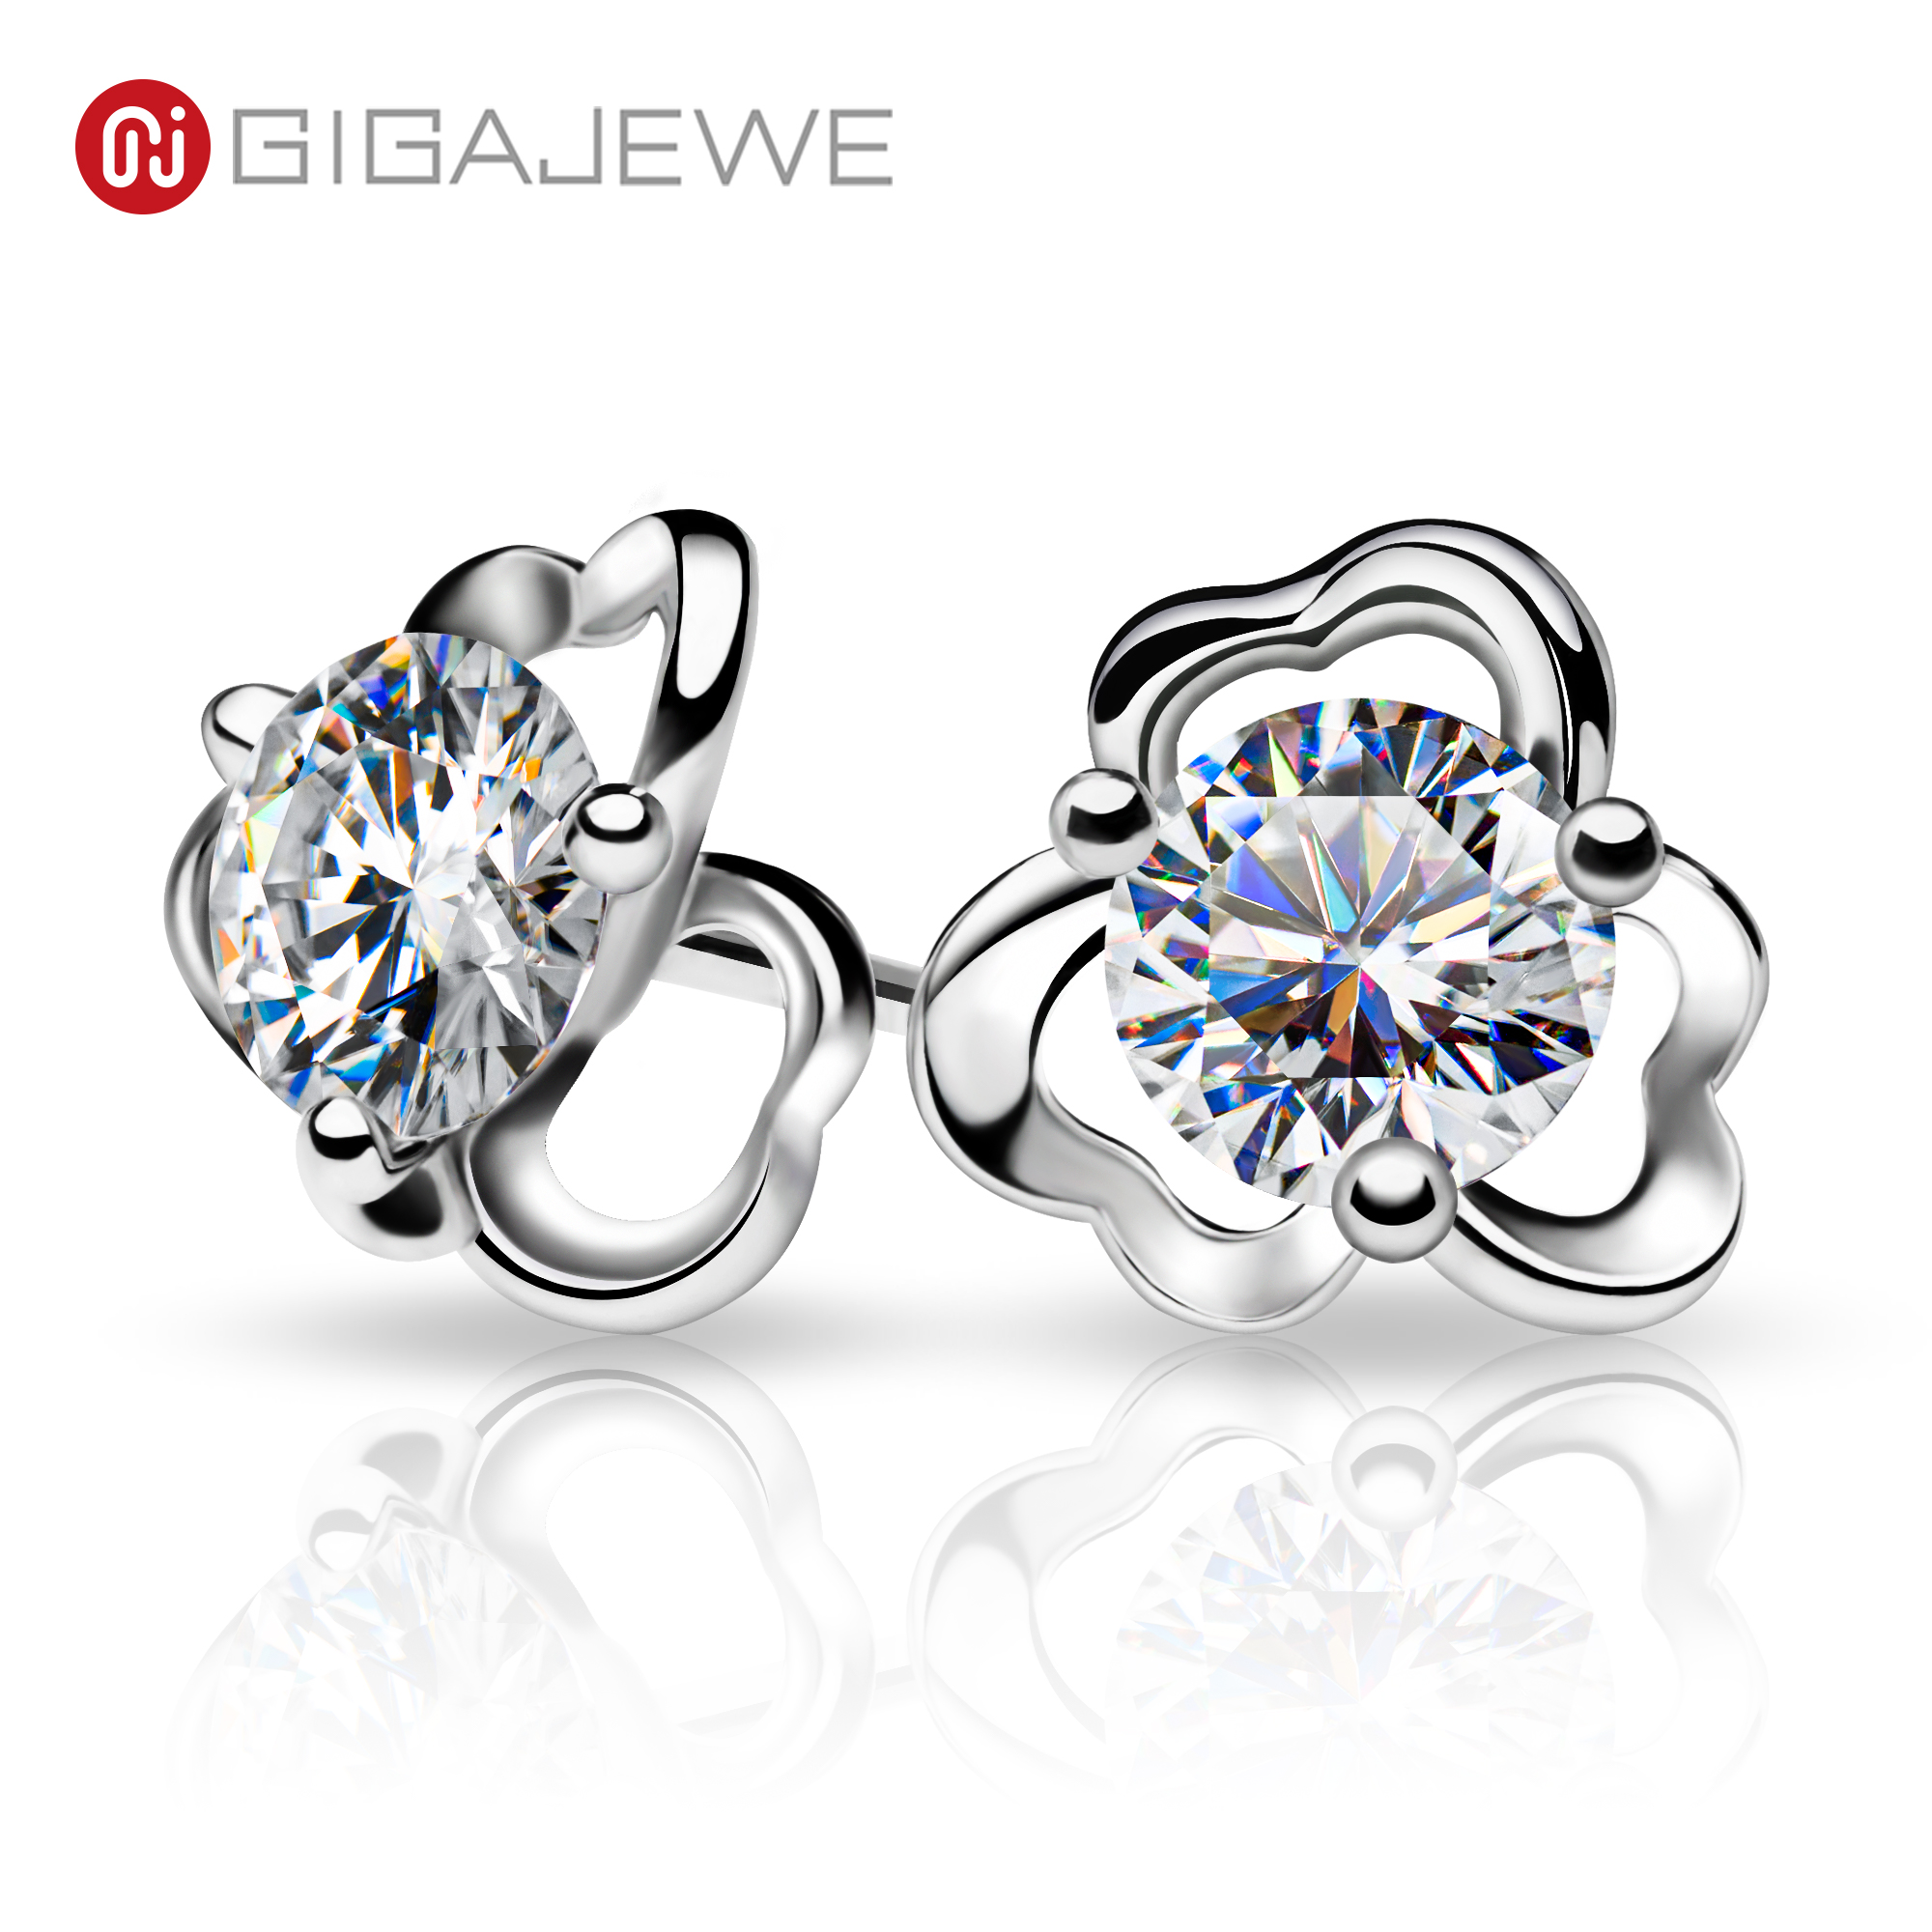 GIGAJEWE 莫桑钻 EF 颜色 VVS1 总计 1.0 克拉 925 银耳环 18K 镀金钻石测试通过珠宝女士女孩礼物